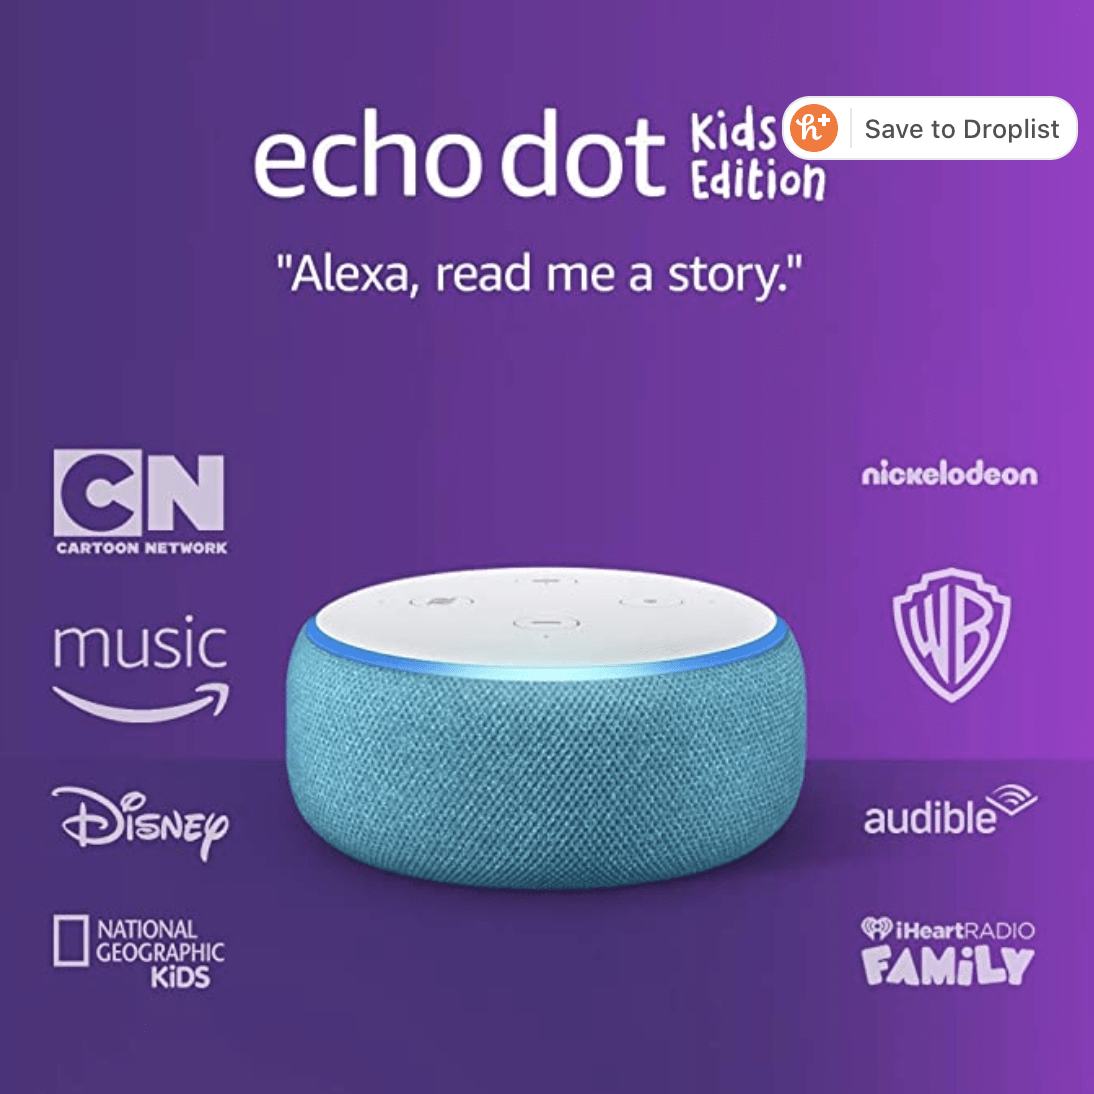 amazon echo dot for kids